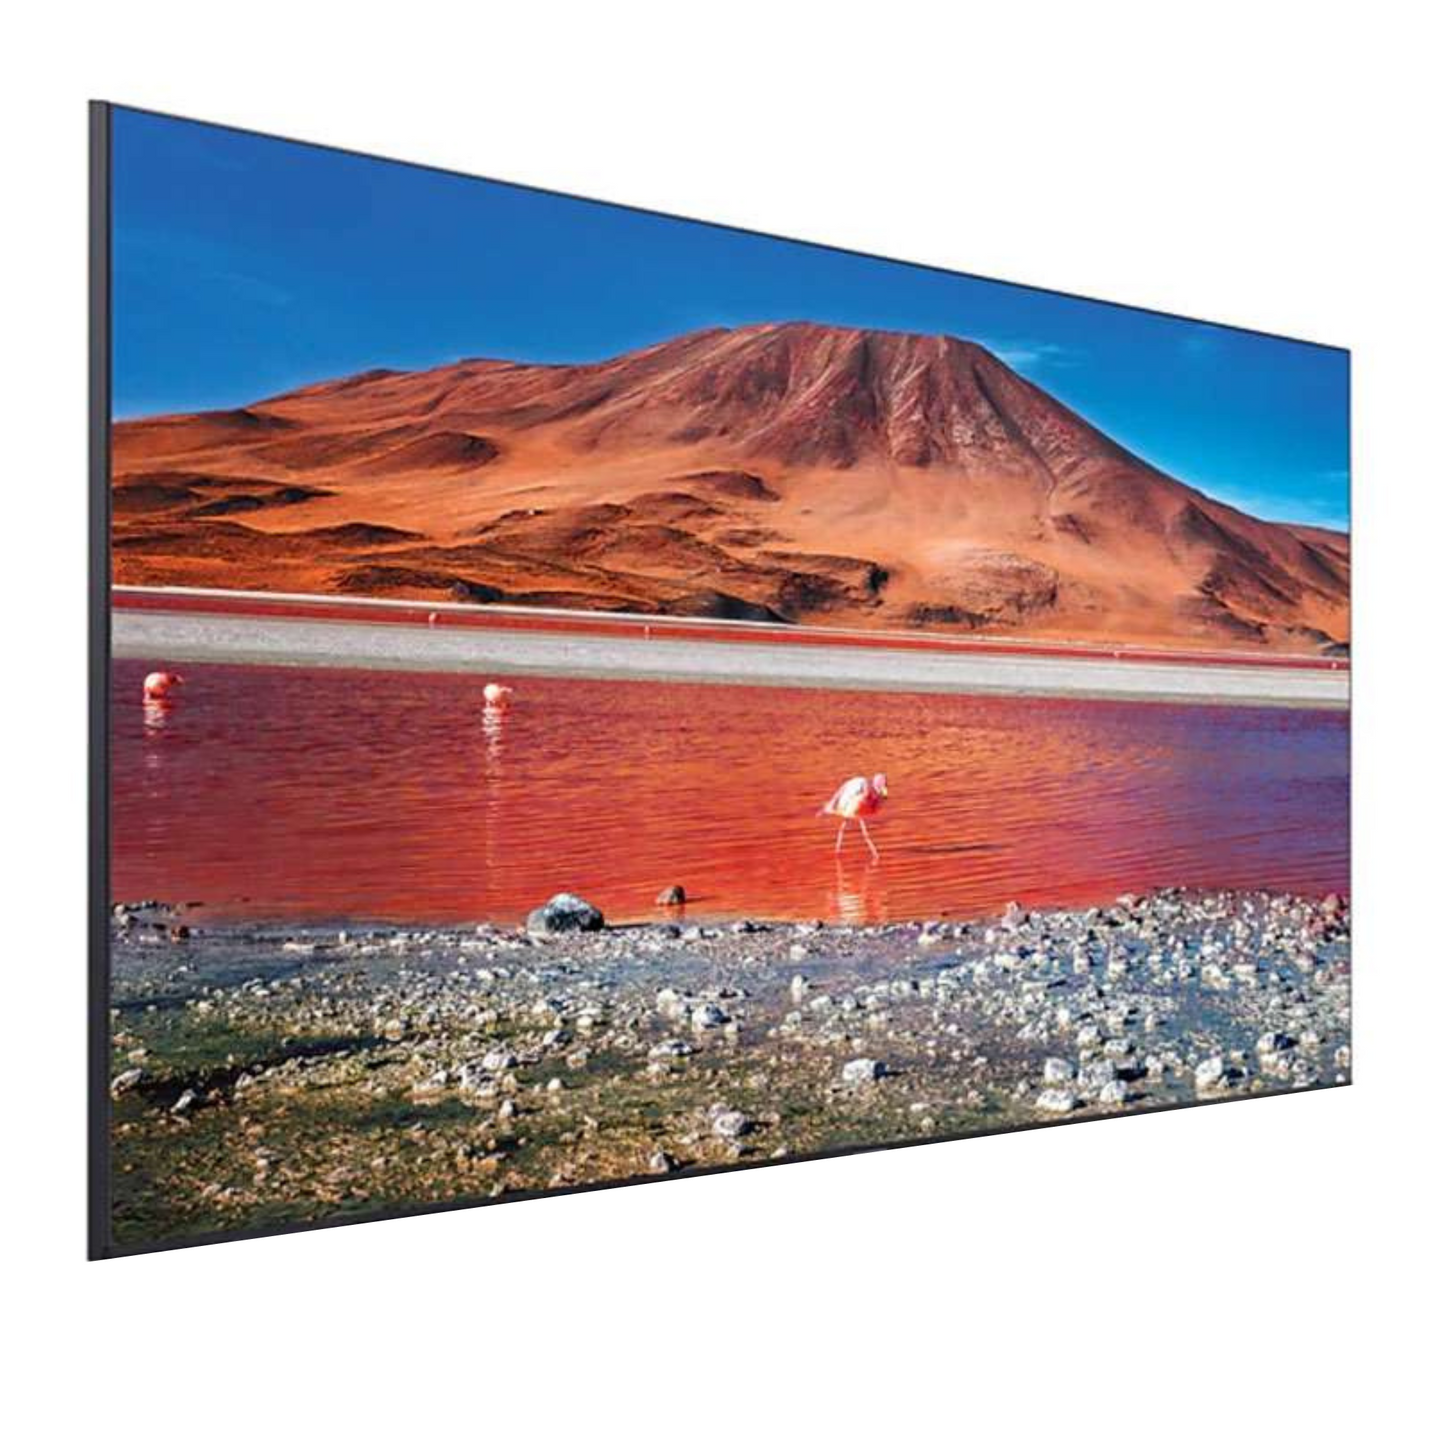 Samsung 60 inch Smart TV, 60TU7000